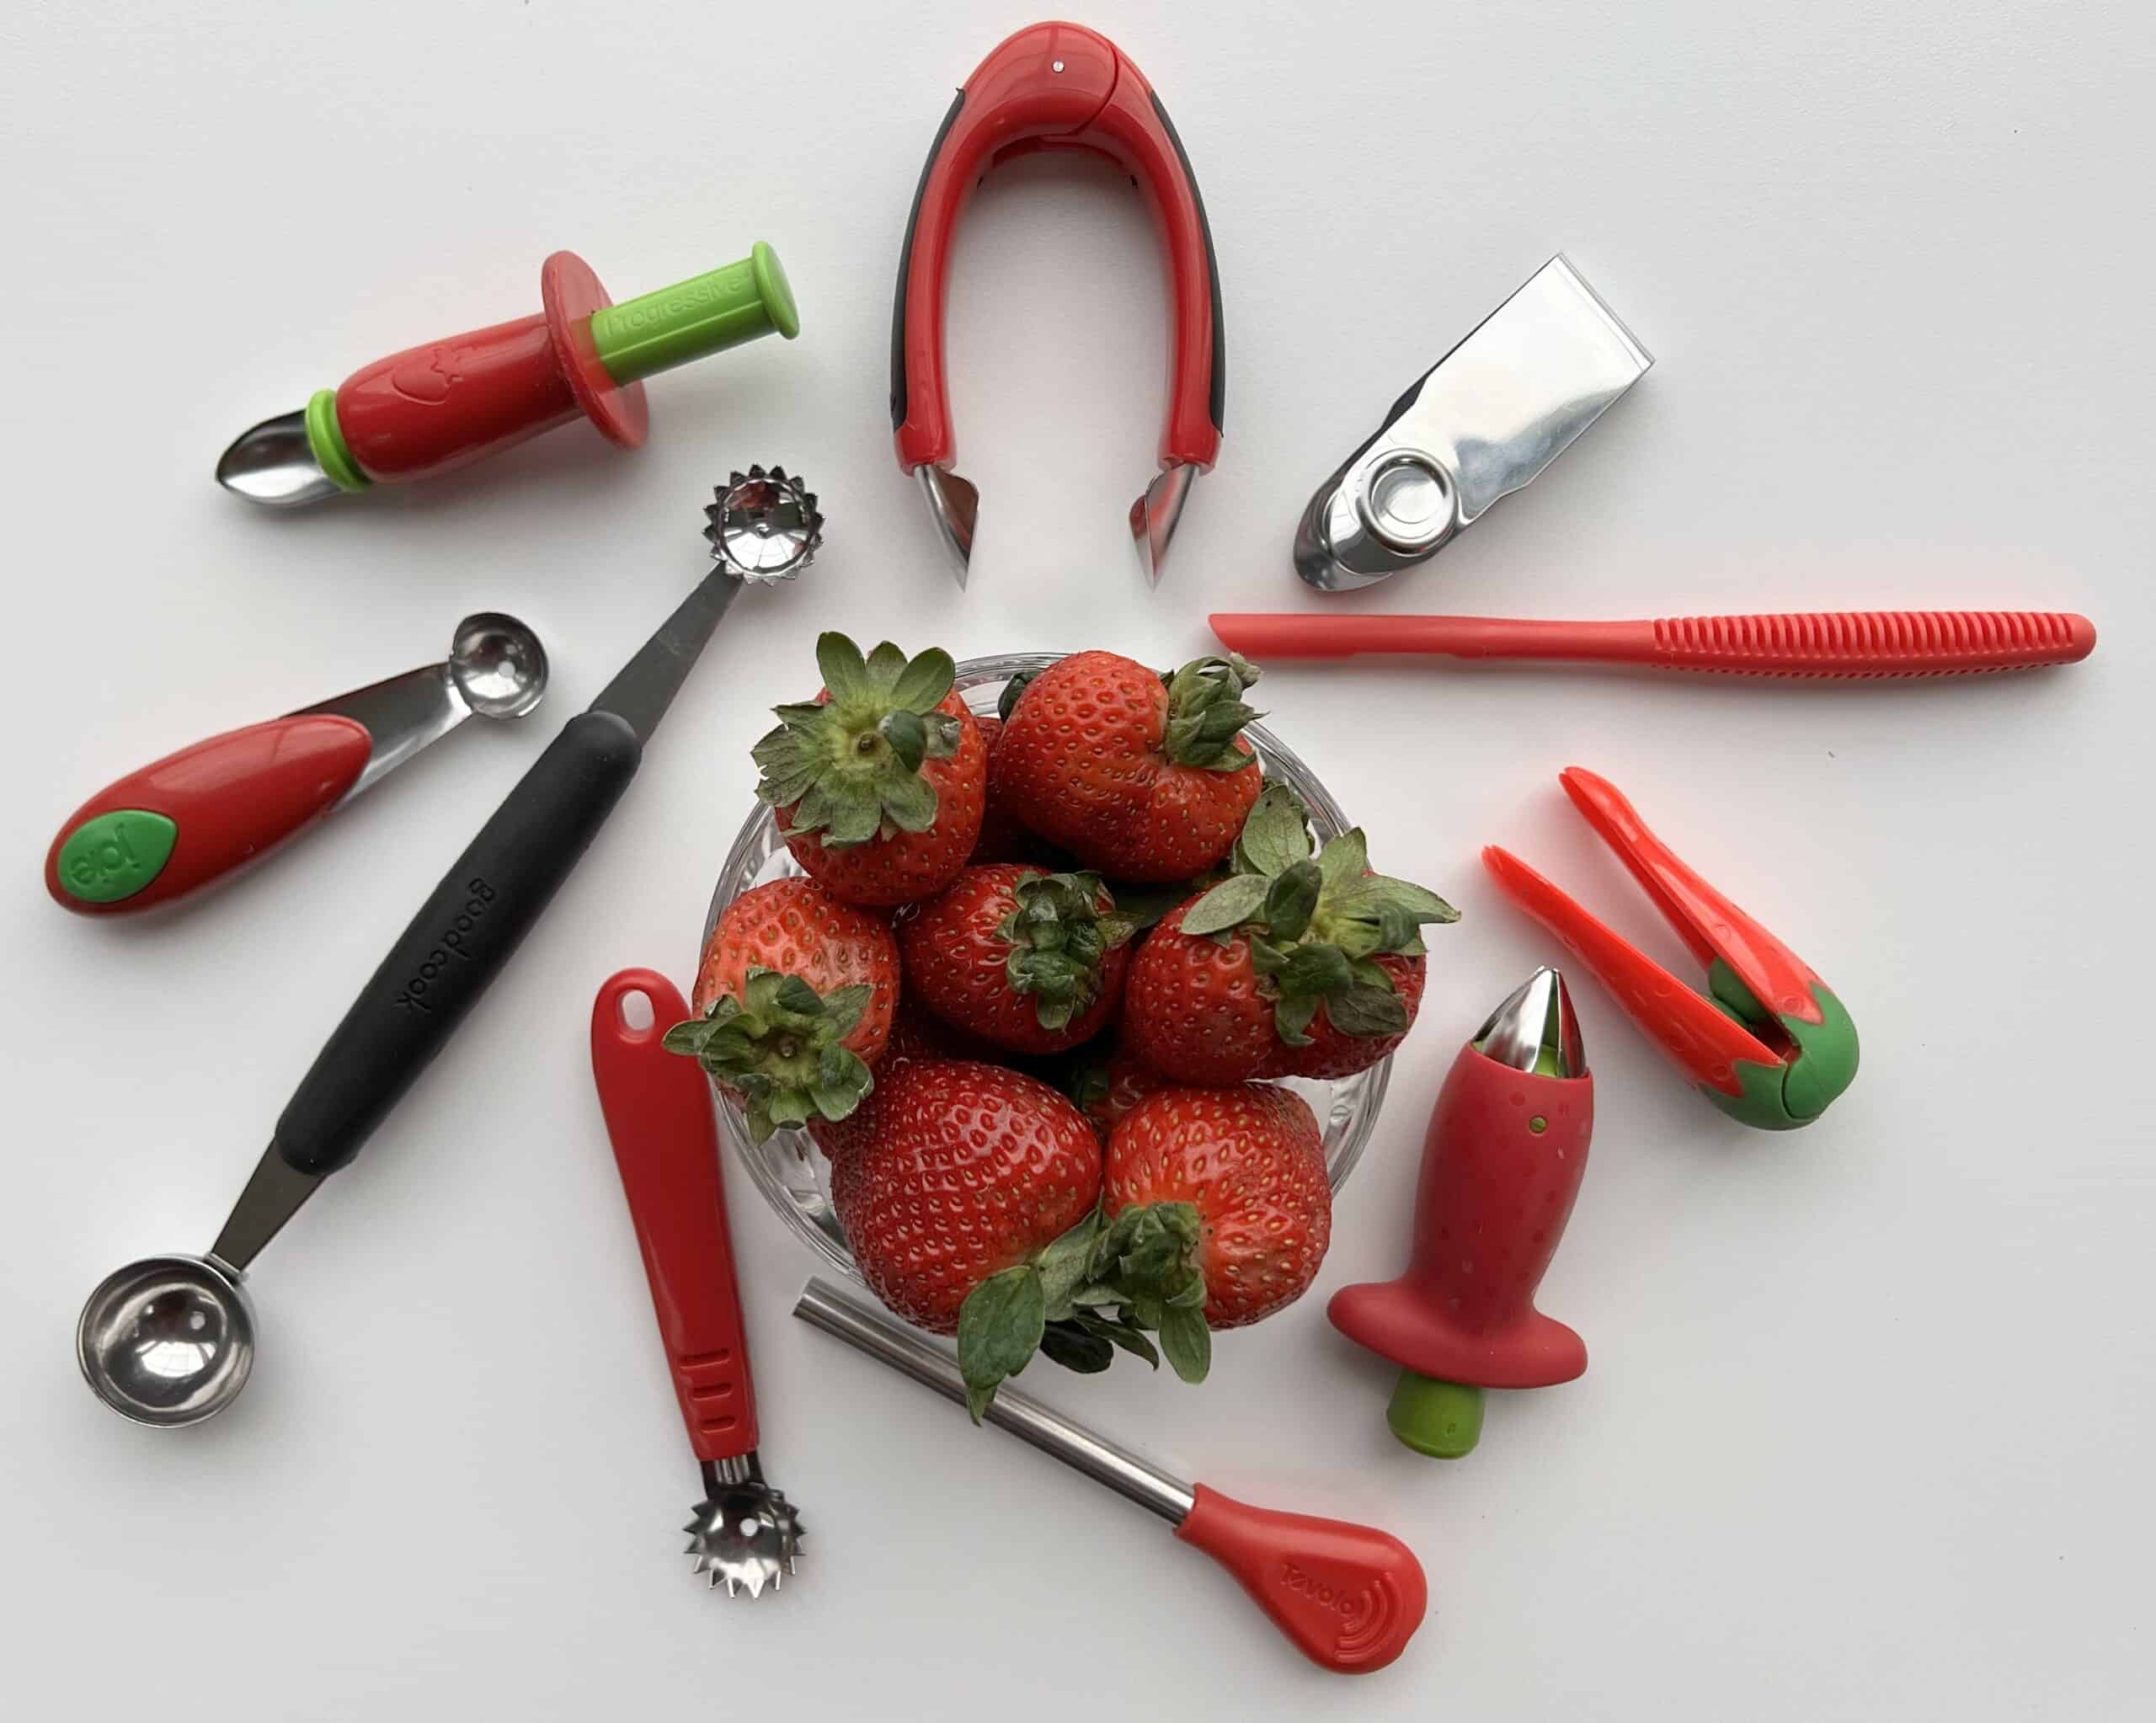 Berry Stem Remover Fruit Corer Slicer